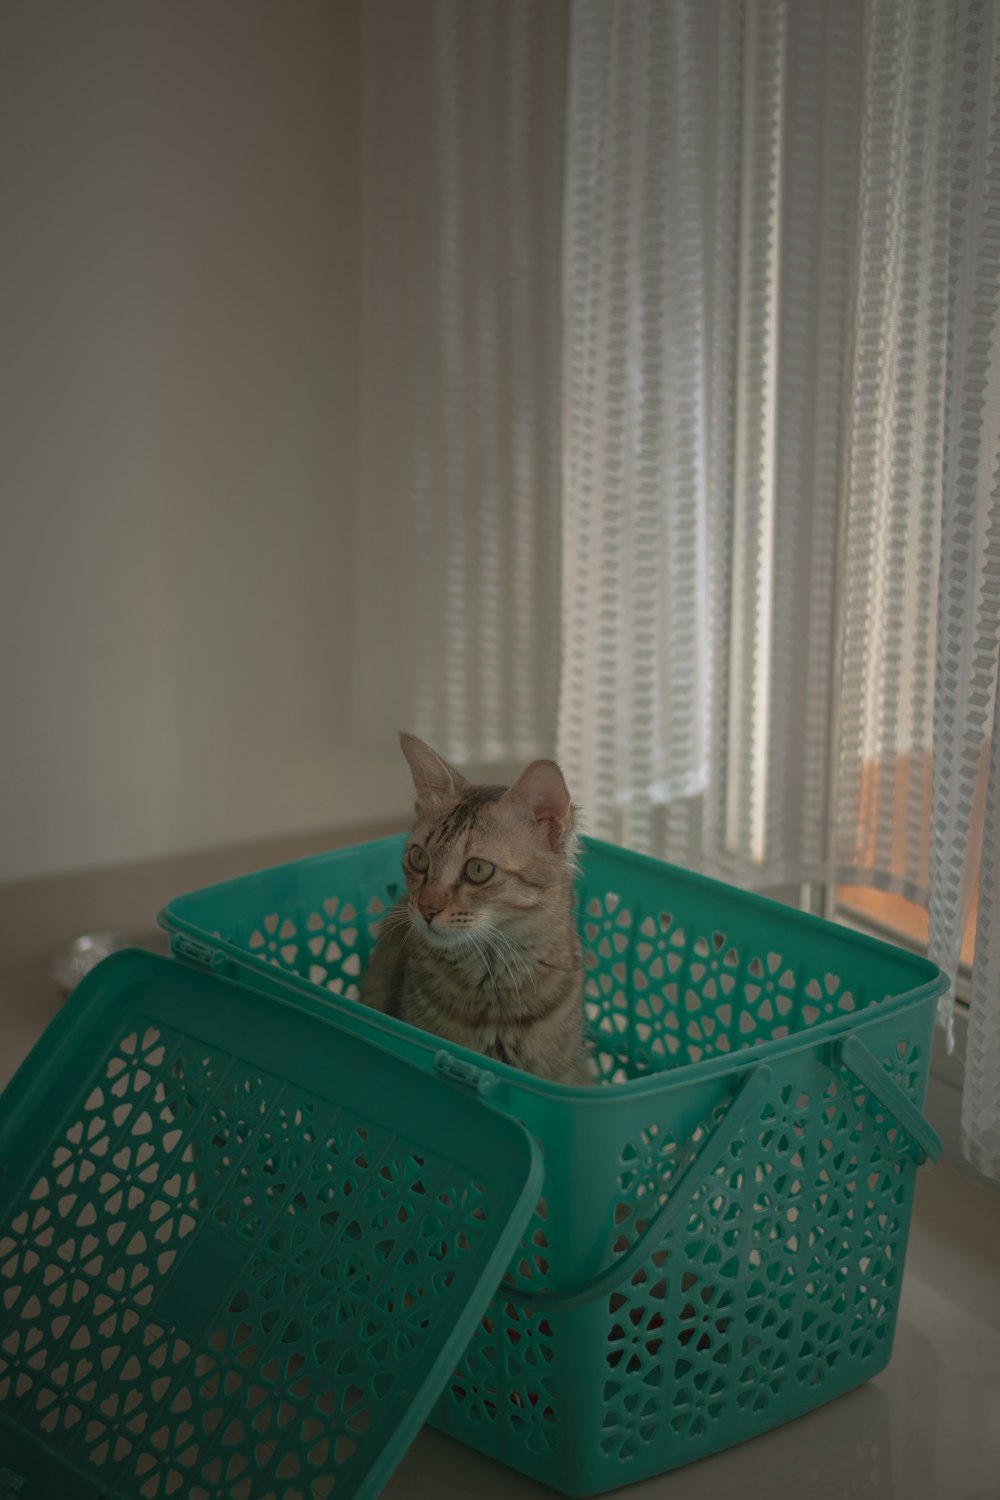 a cat sitting inside of a green basket